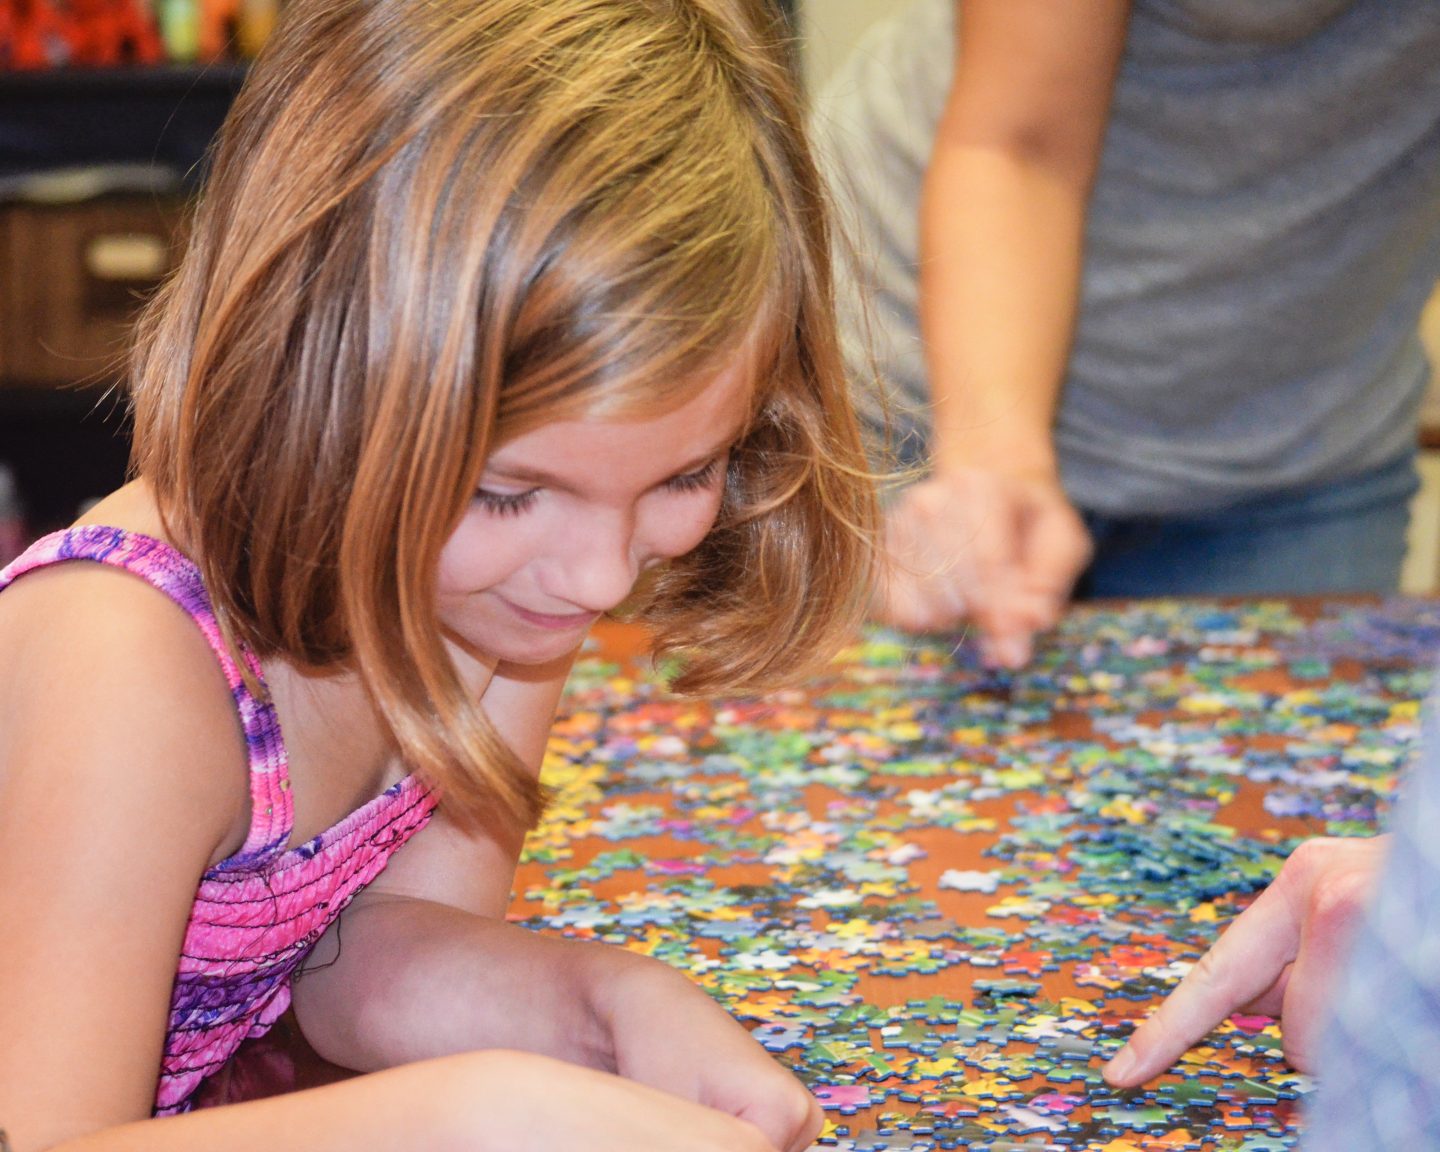 Child doing jigsaw puzzle